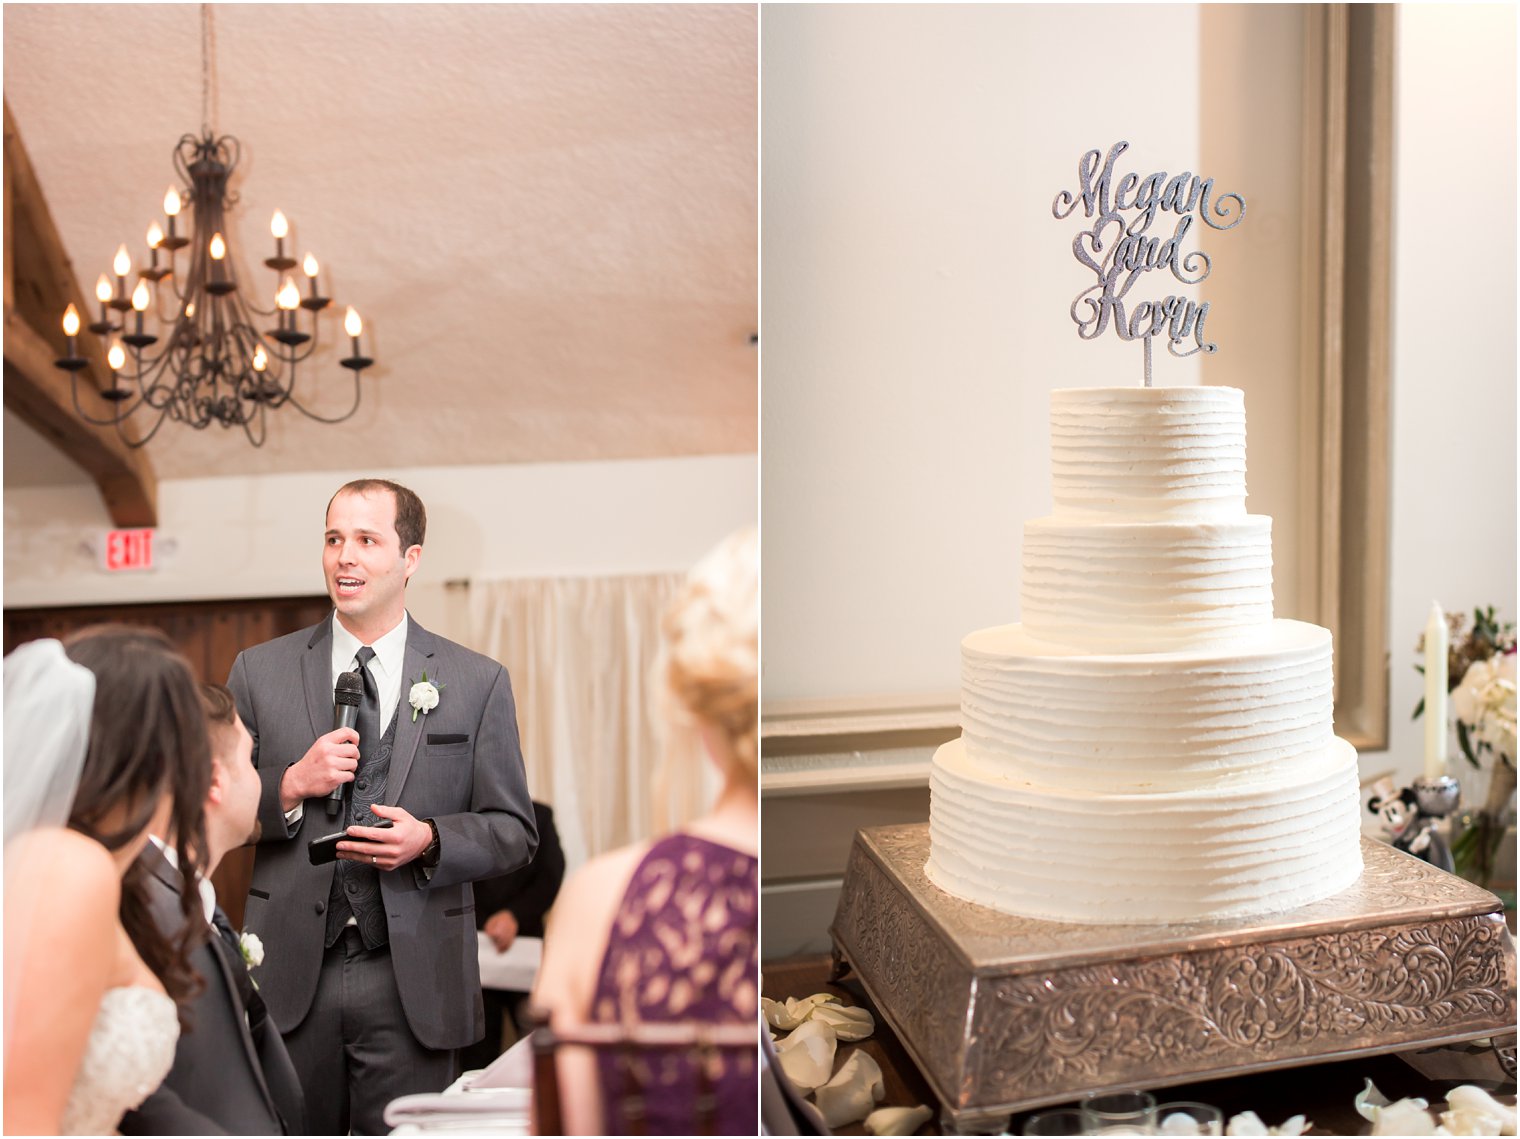 Simple White Wedding Cake by Holly Hedge Estate | Photo by PA Wedding Photographers Idalia Photography